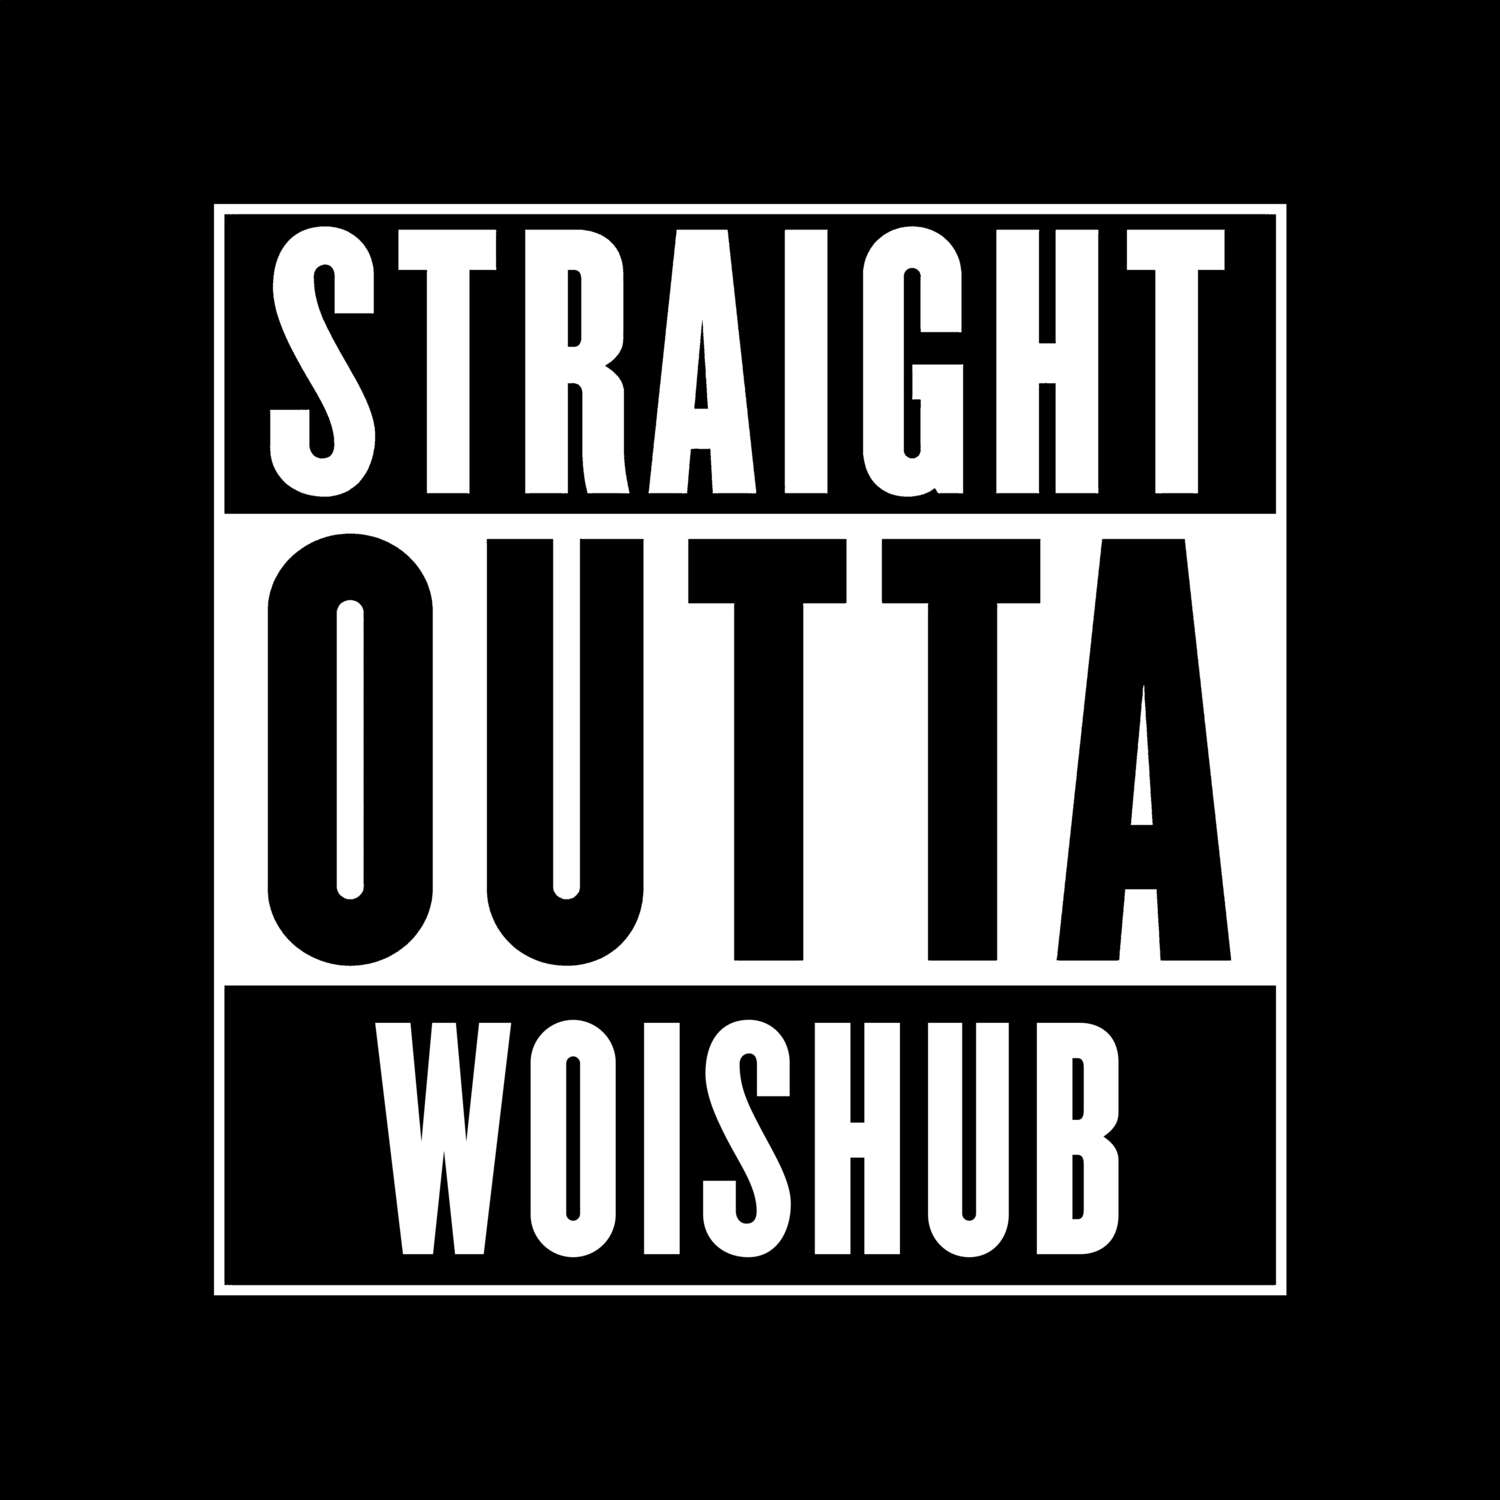 Woishub T-Shirt »Straight Outta«